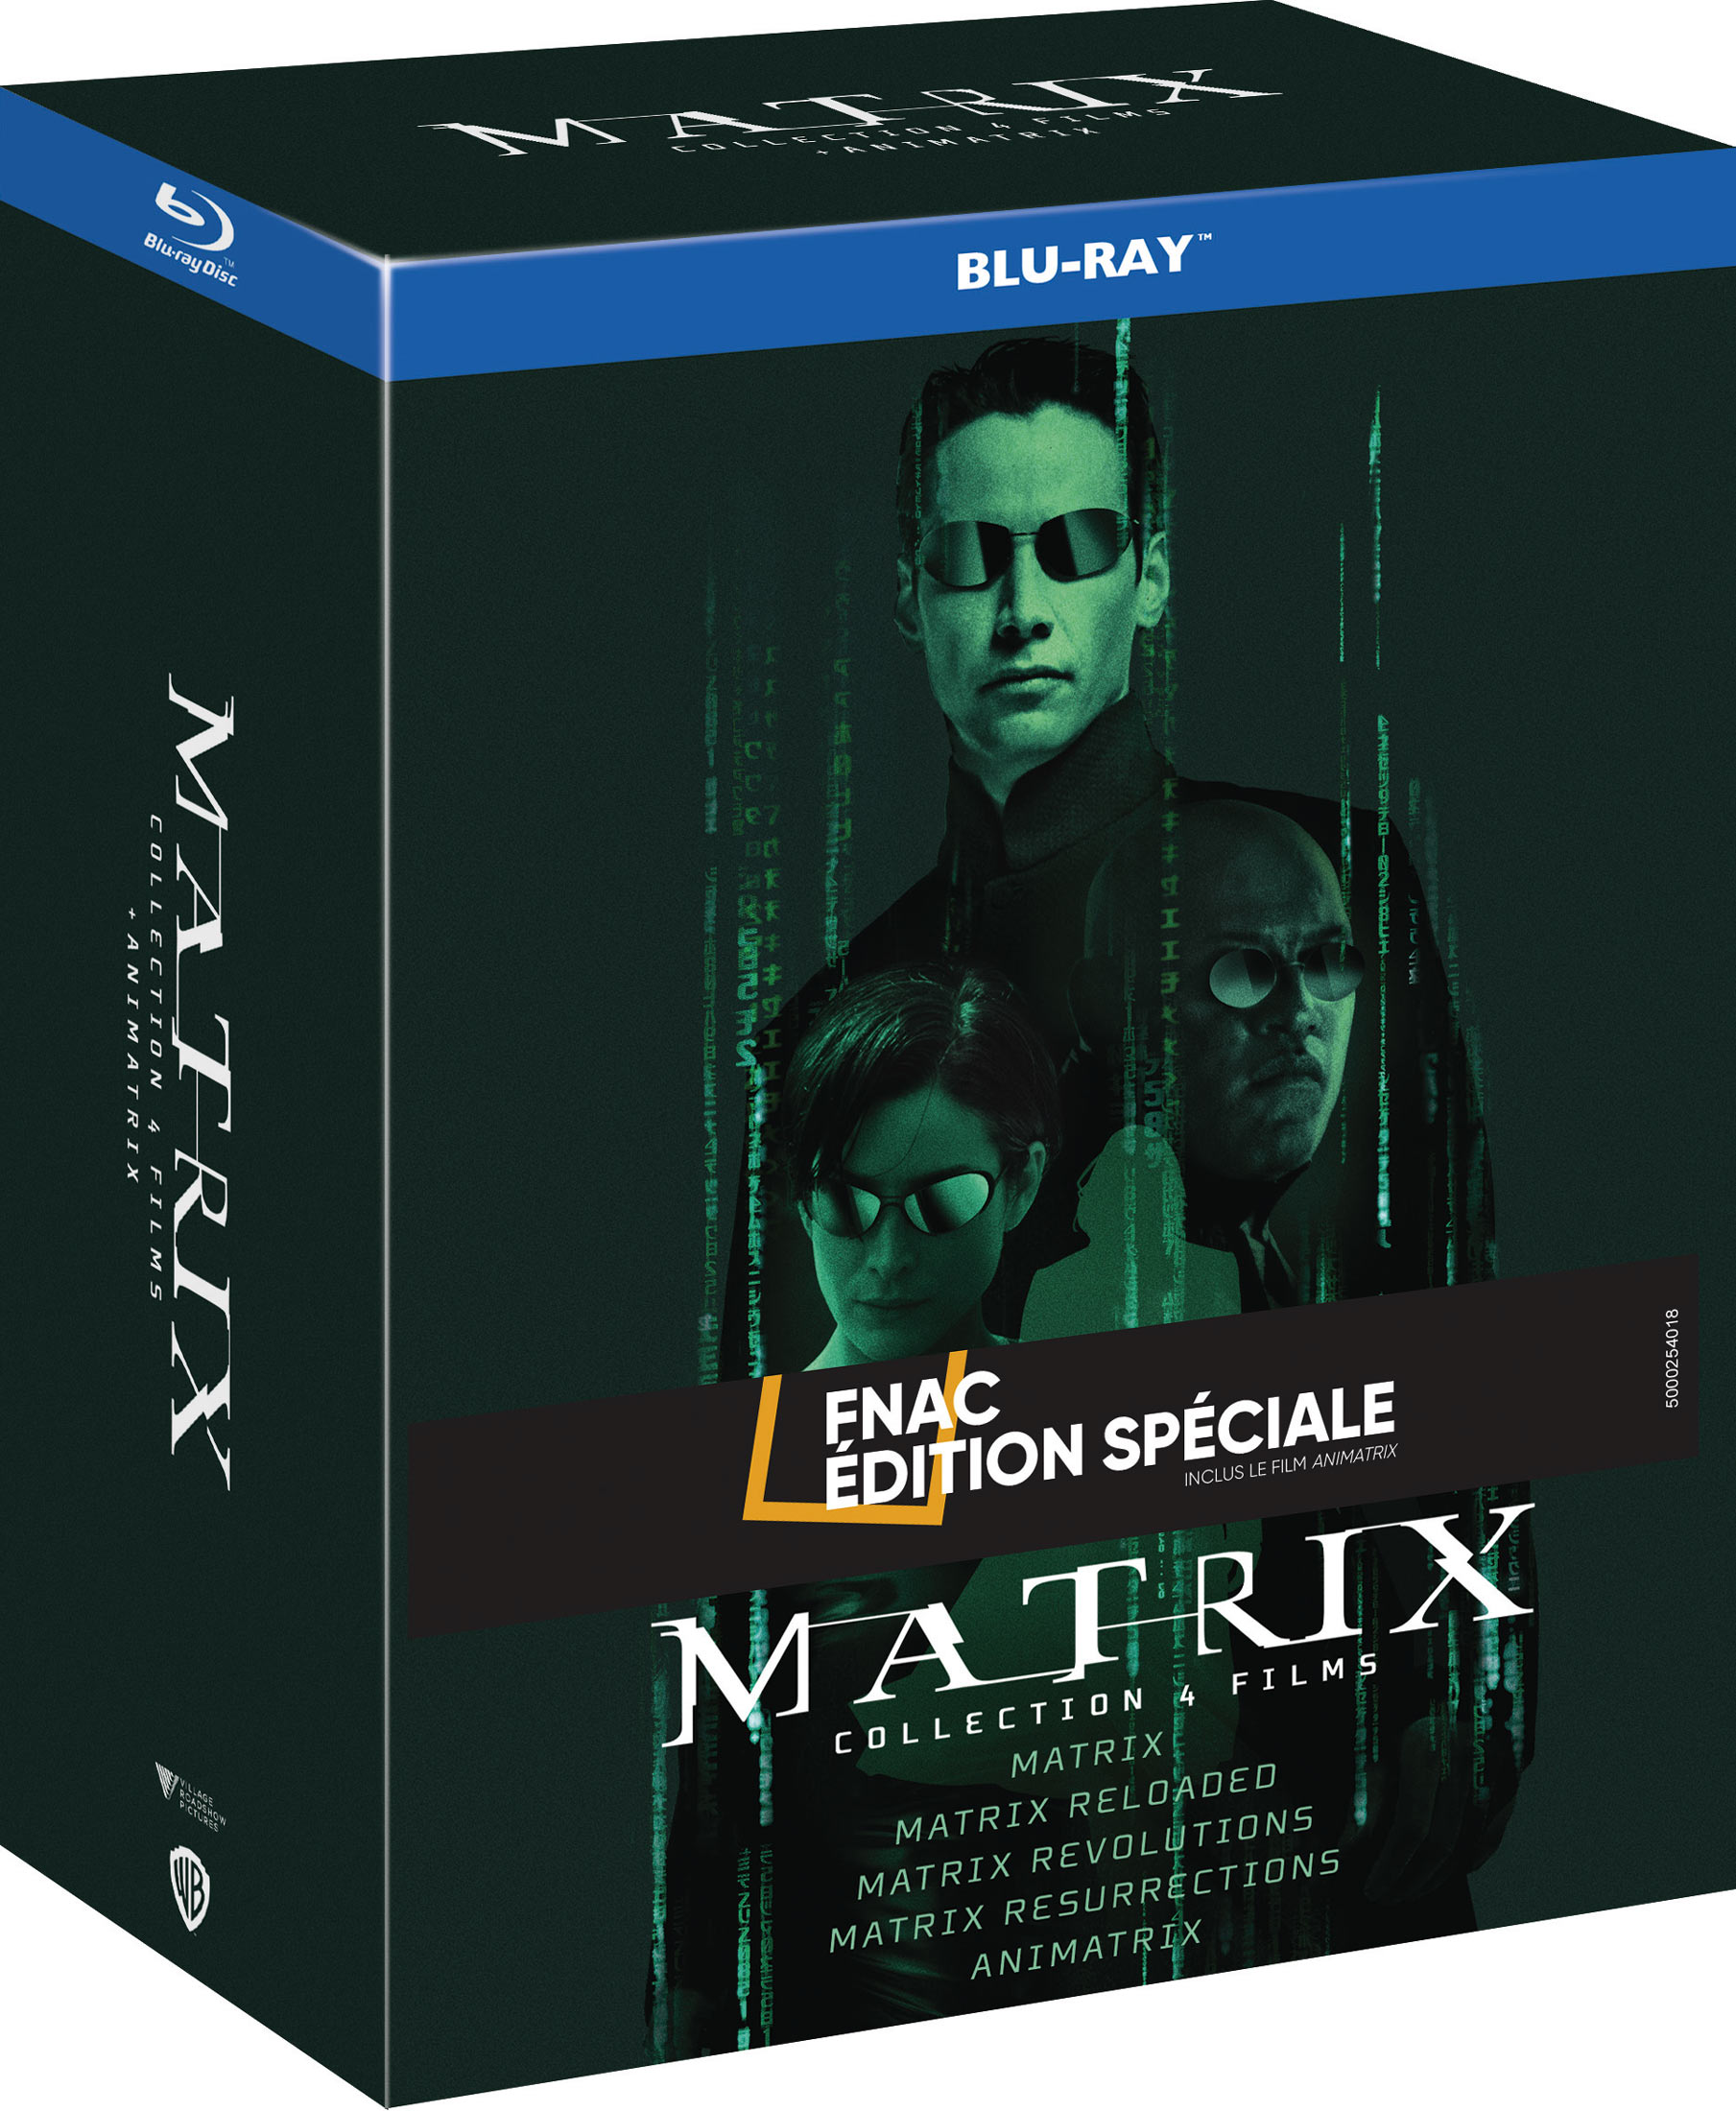 Matrix - Collection 4 films + Animatrix - Blu-ray